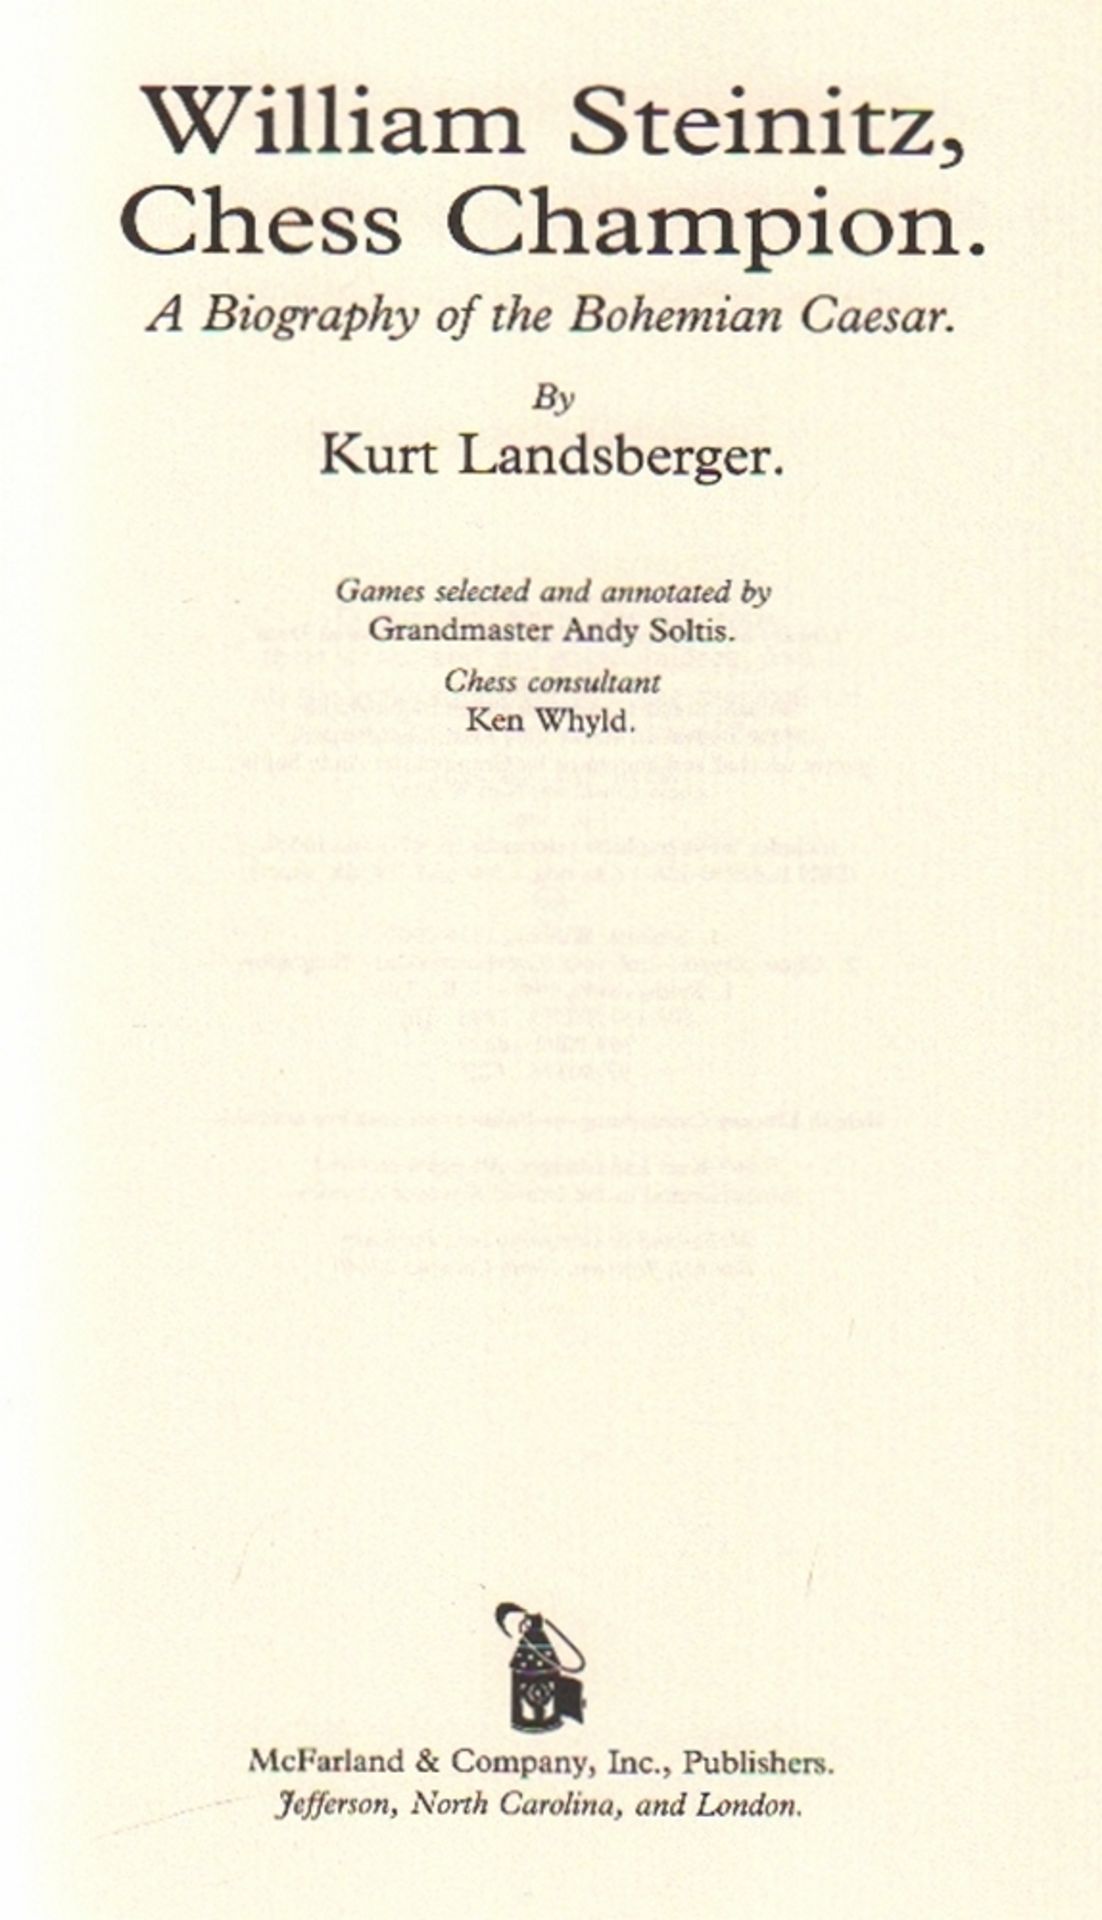 Steinitz. Landsberger, Kurt. William Steinitz, Chess Champion. A Biography of the Bohemian Caesar.